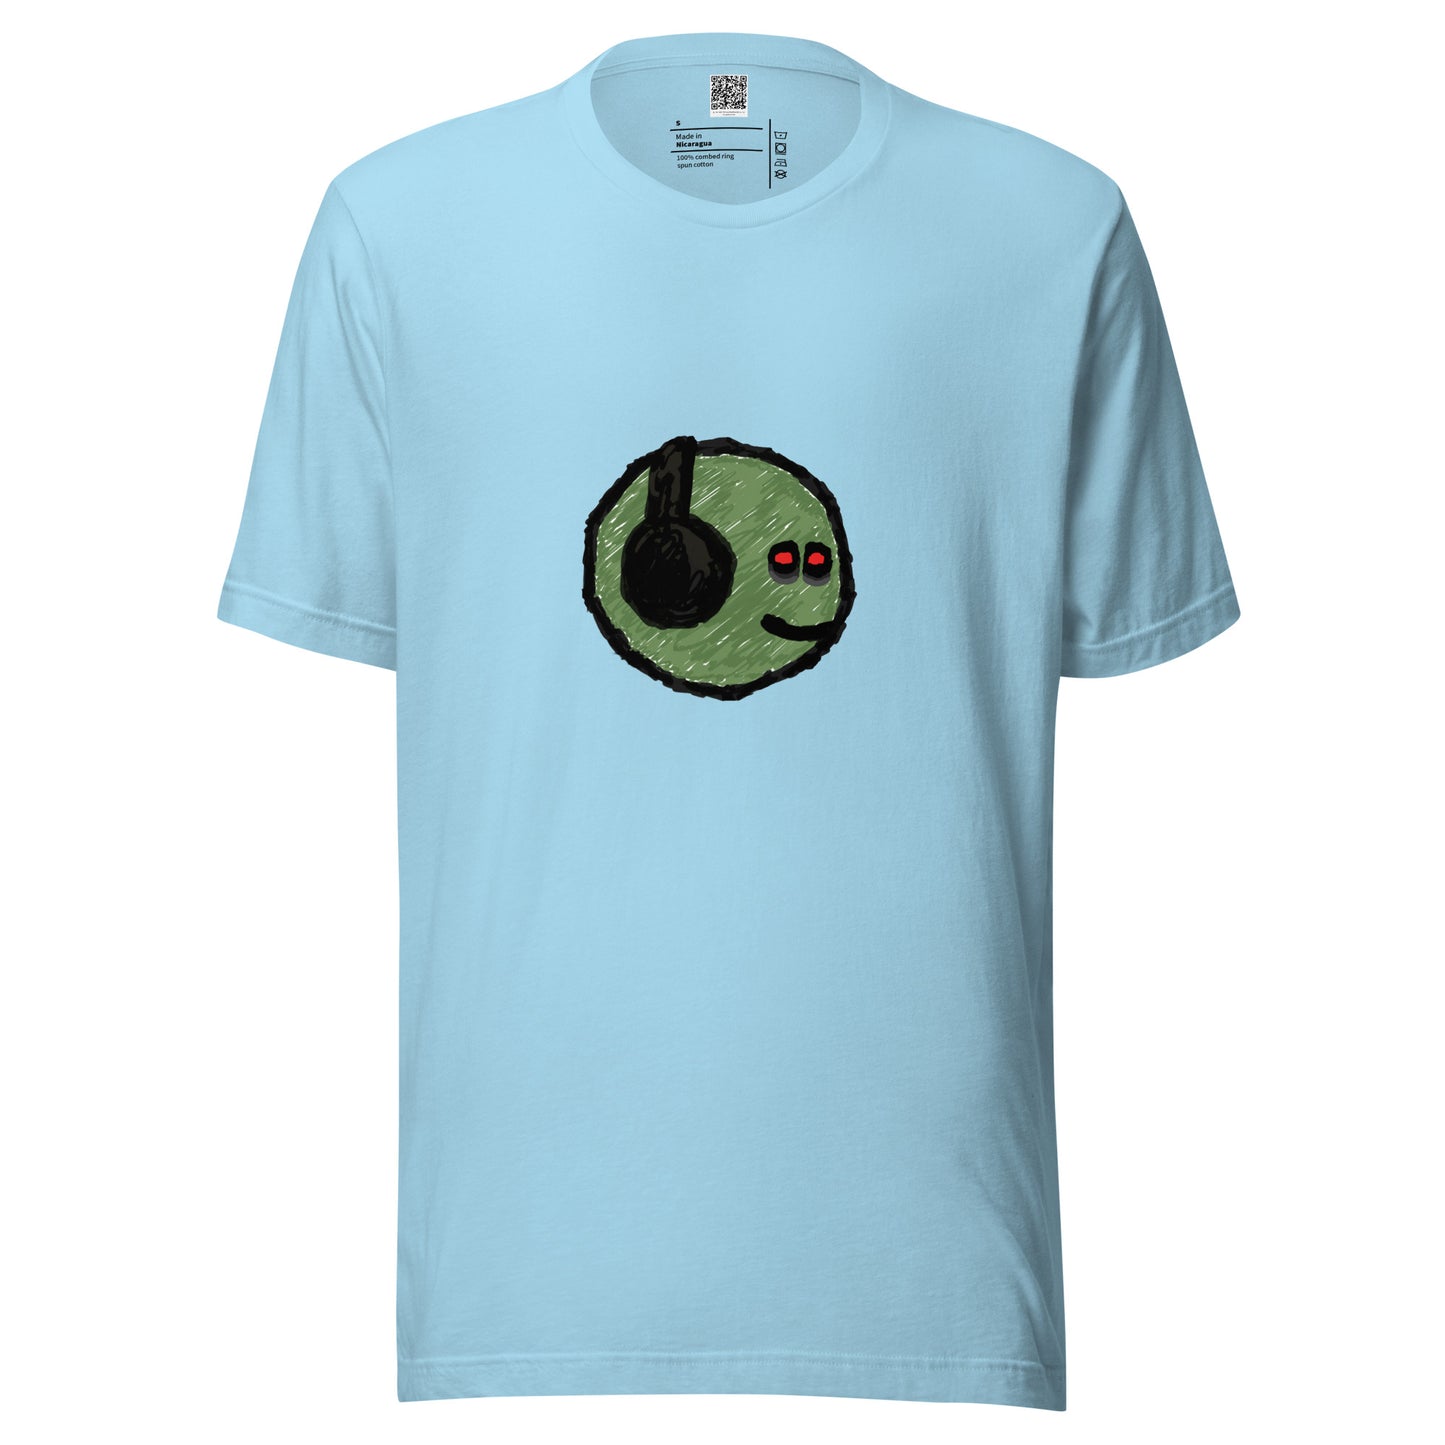 Unisex t-shirt - mfers zombie head